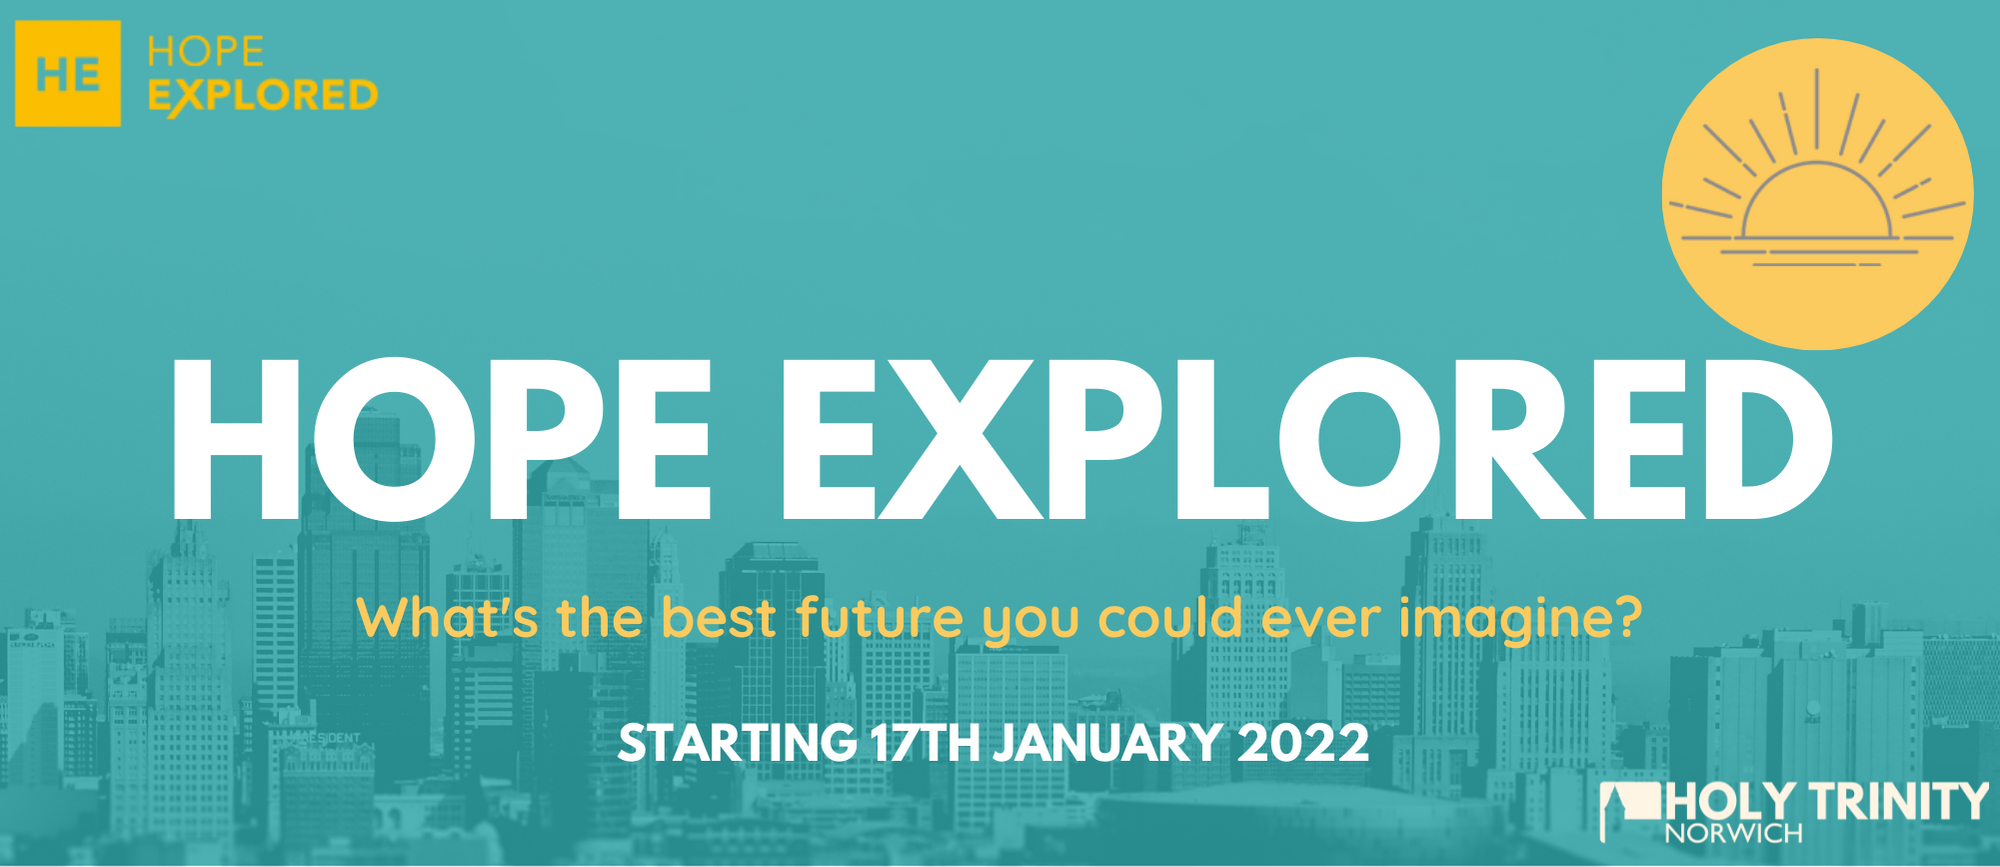 HOPE EXPLORED web banner